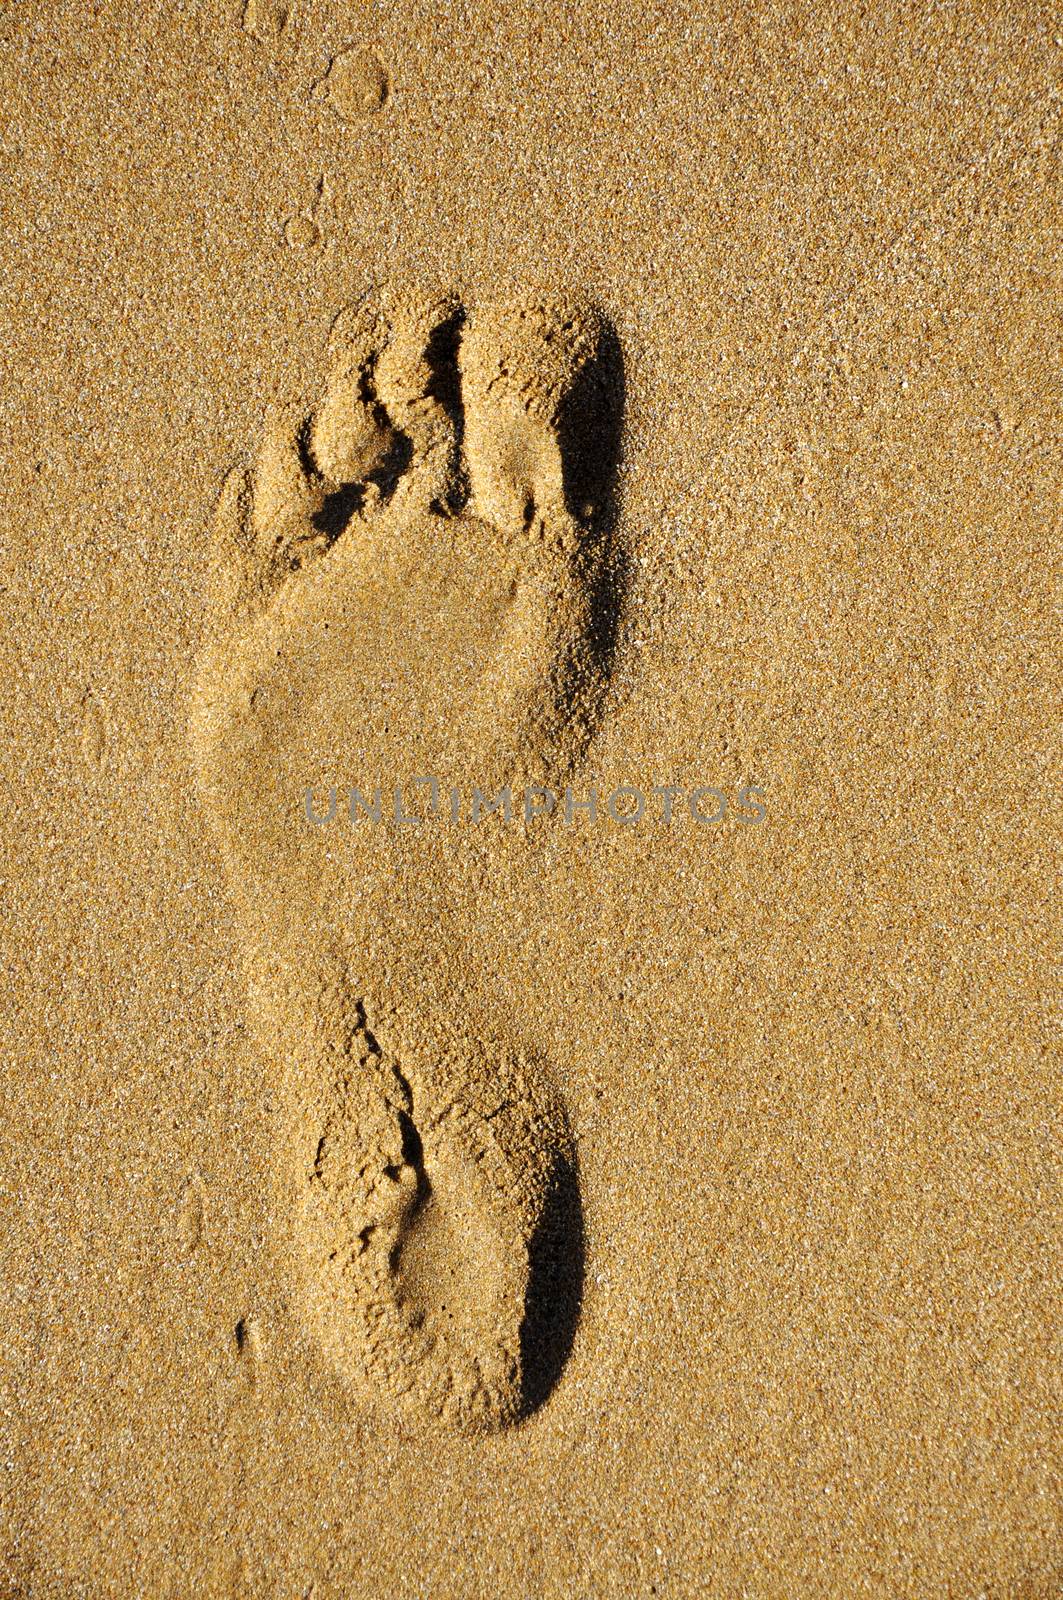 Sandy beach, waves, walking on the beach, footprints in the sand.